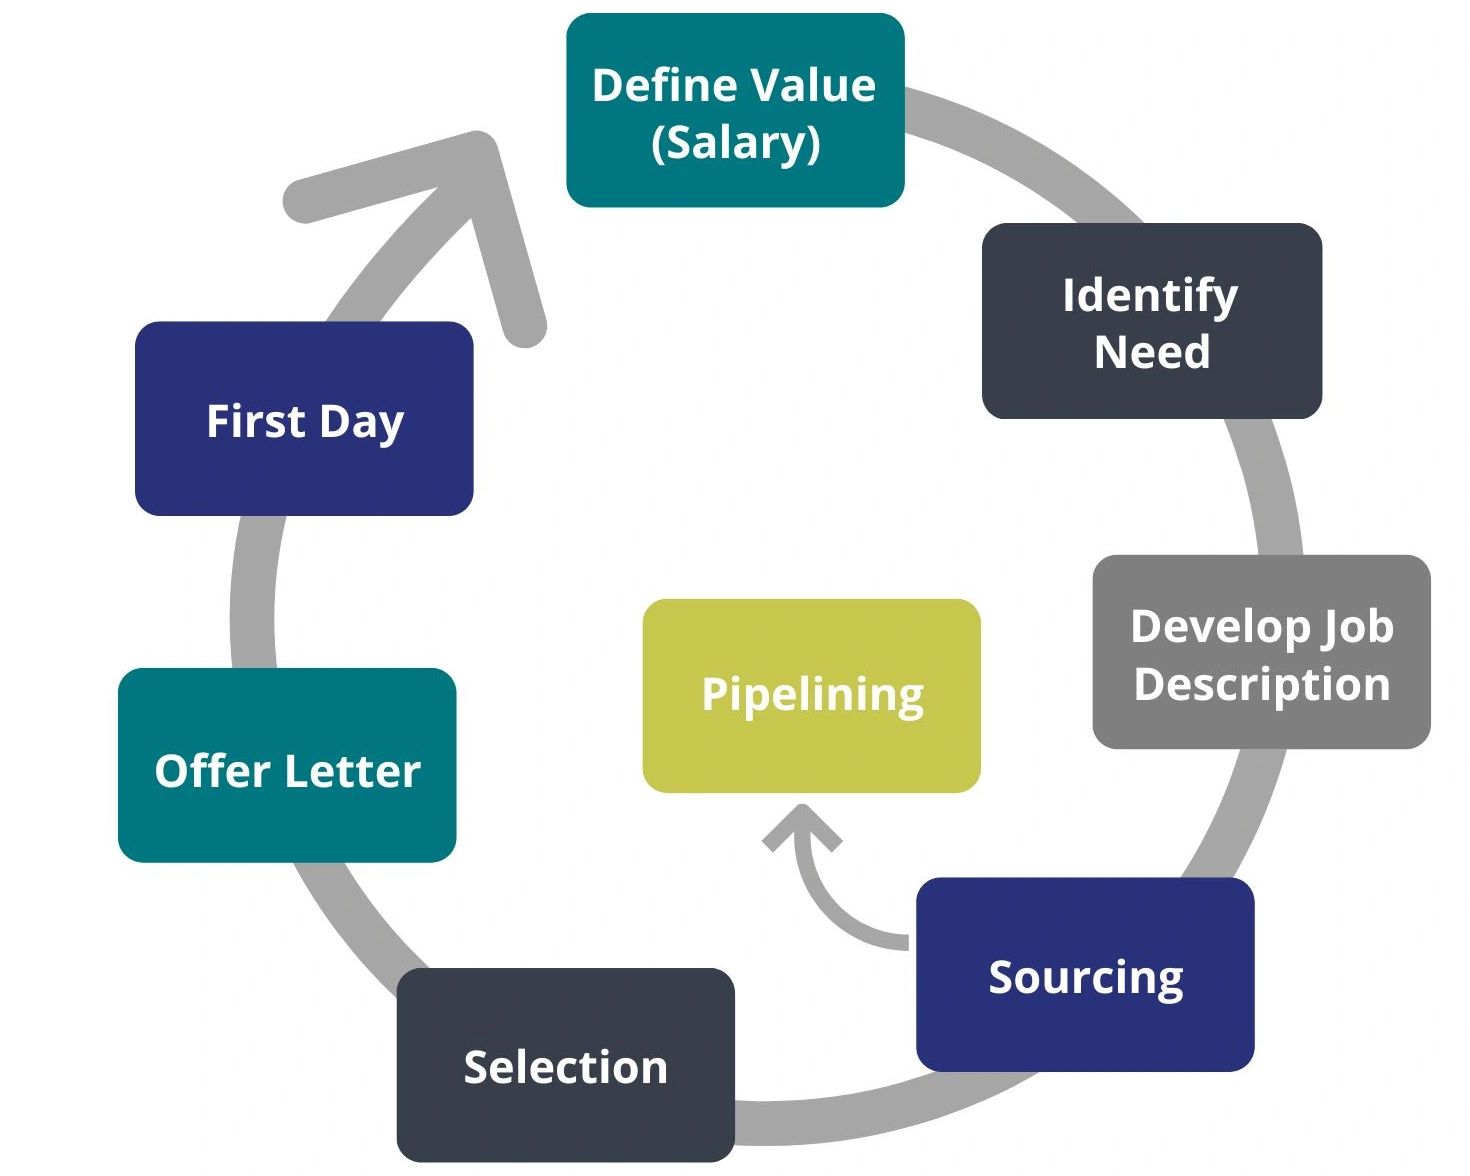 define value, identify need, develop job description, sourcing, pipelining, selection, offer letter